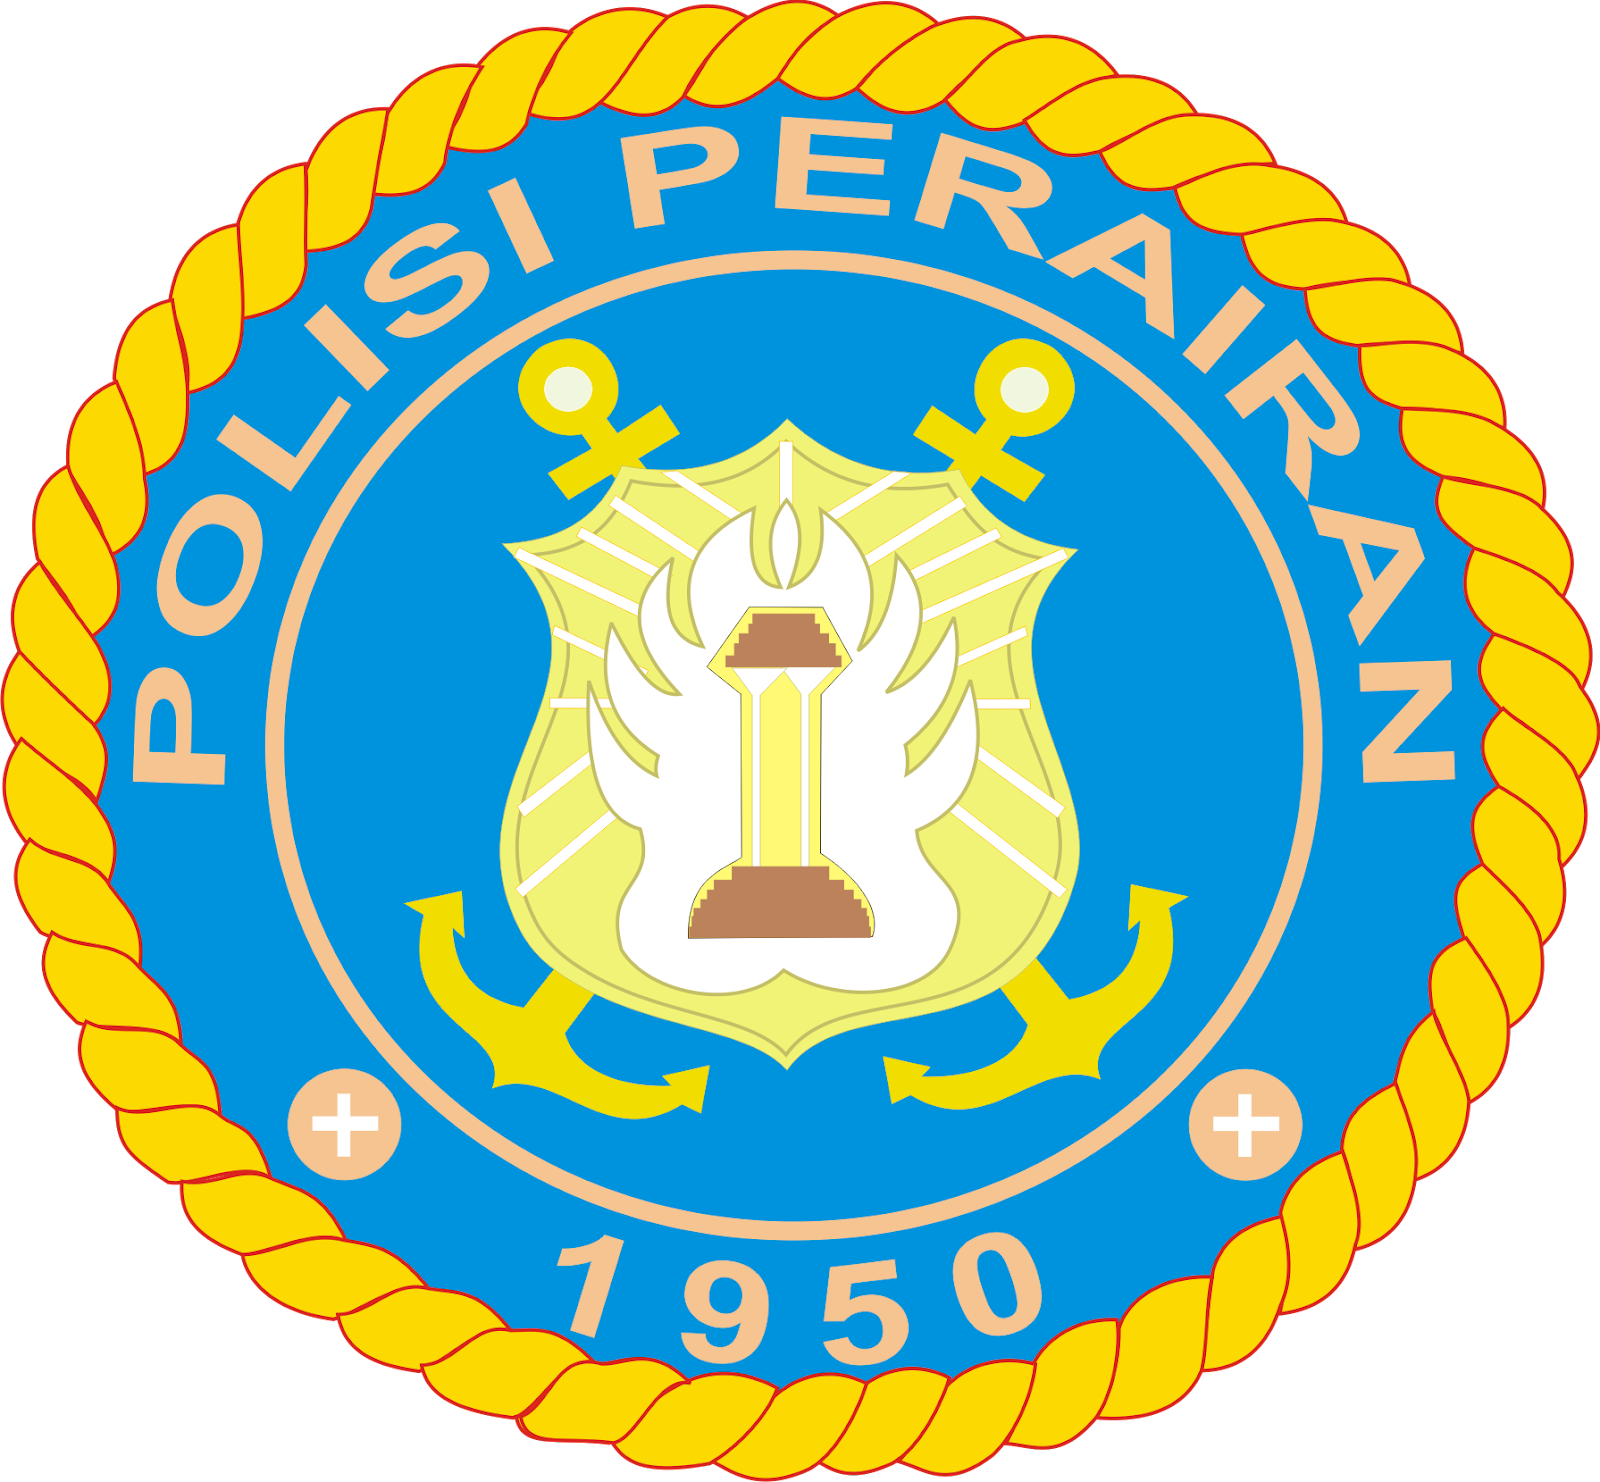 Logo Polisi Perairan Kumpulan Logo Lambang Indonesia